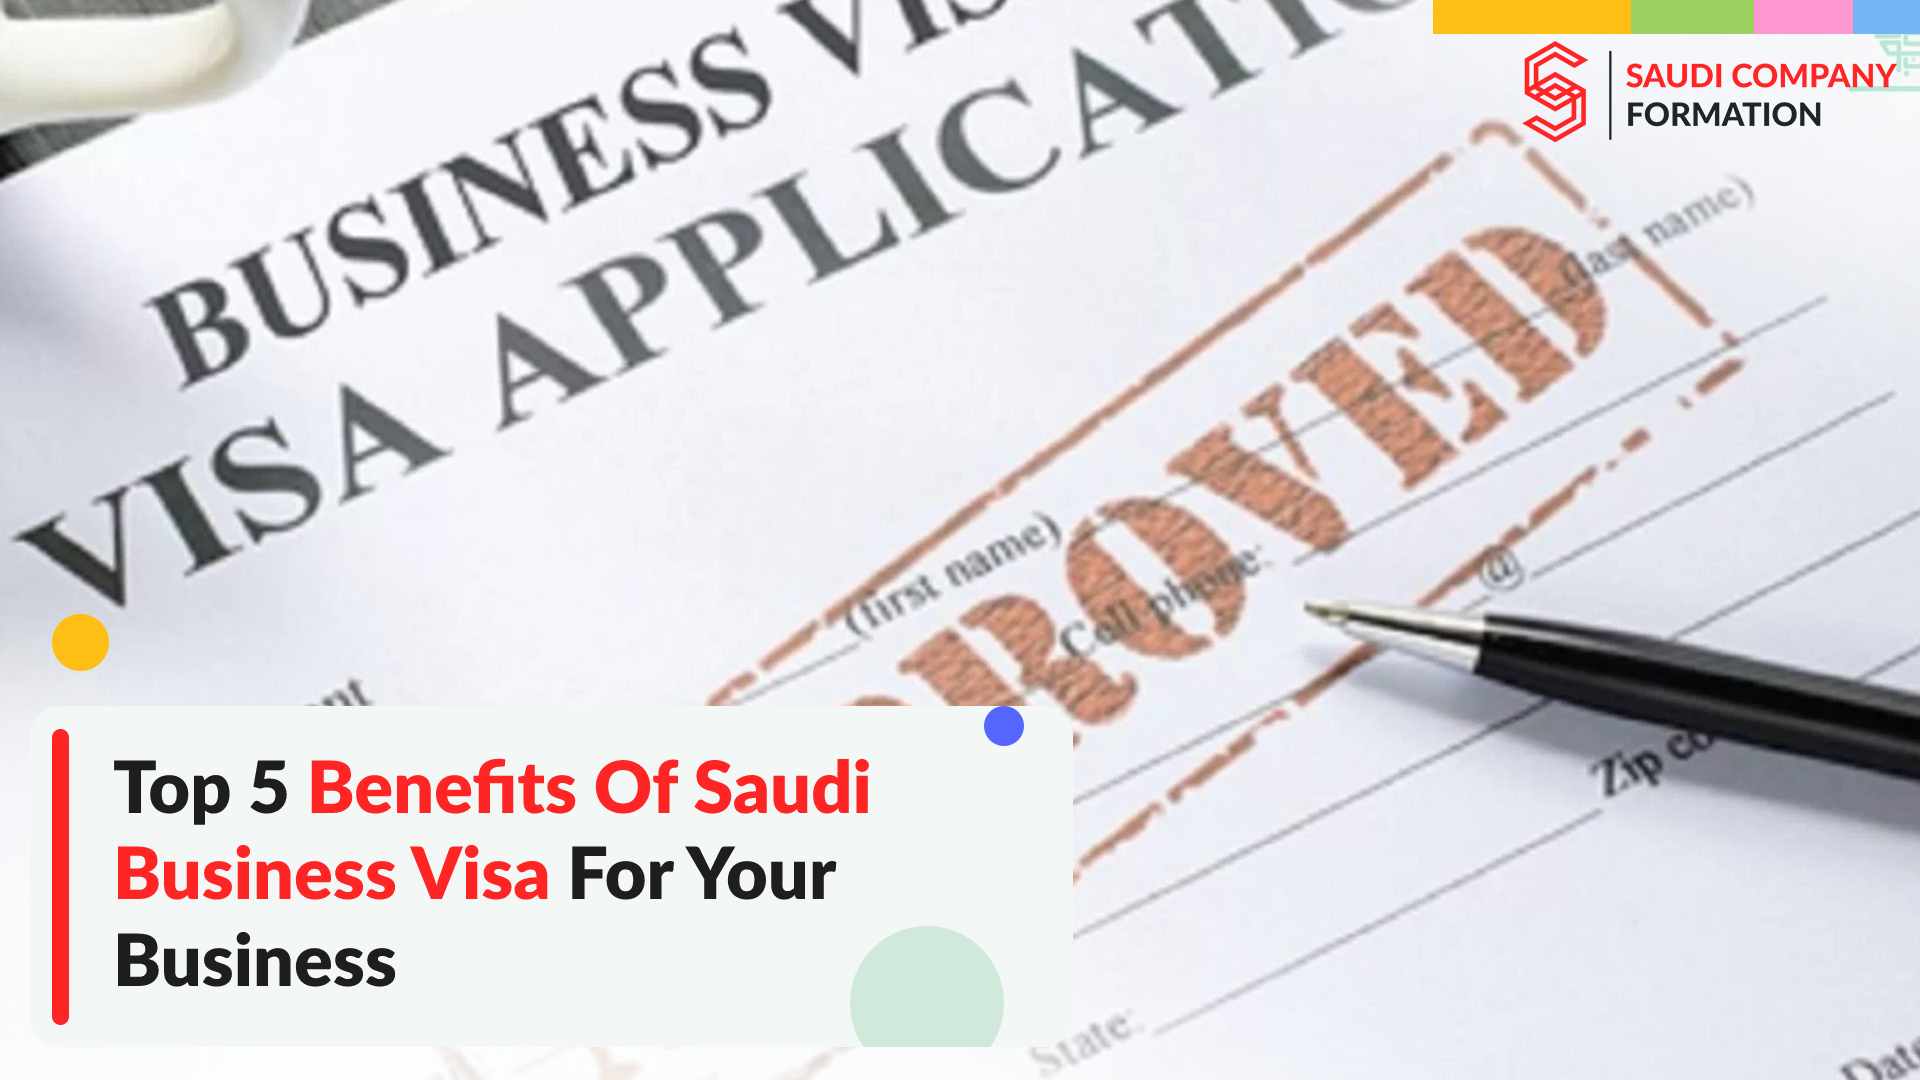 Top 5 Benefits Of Saudi Business Visa For Your Business